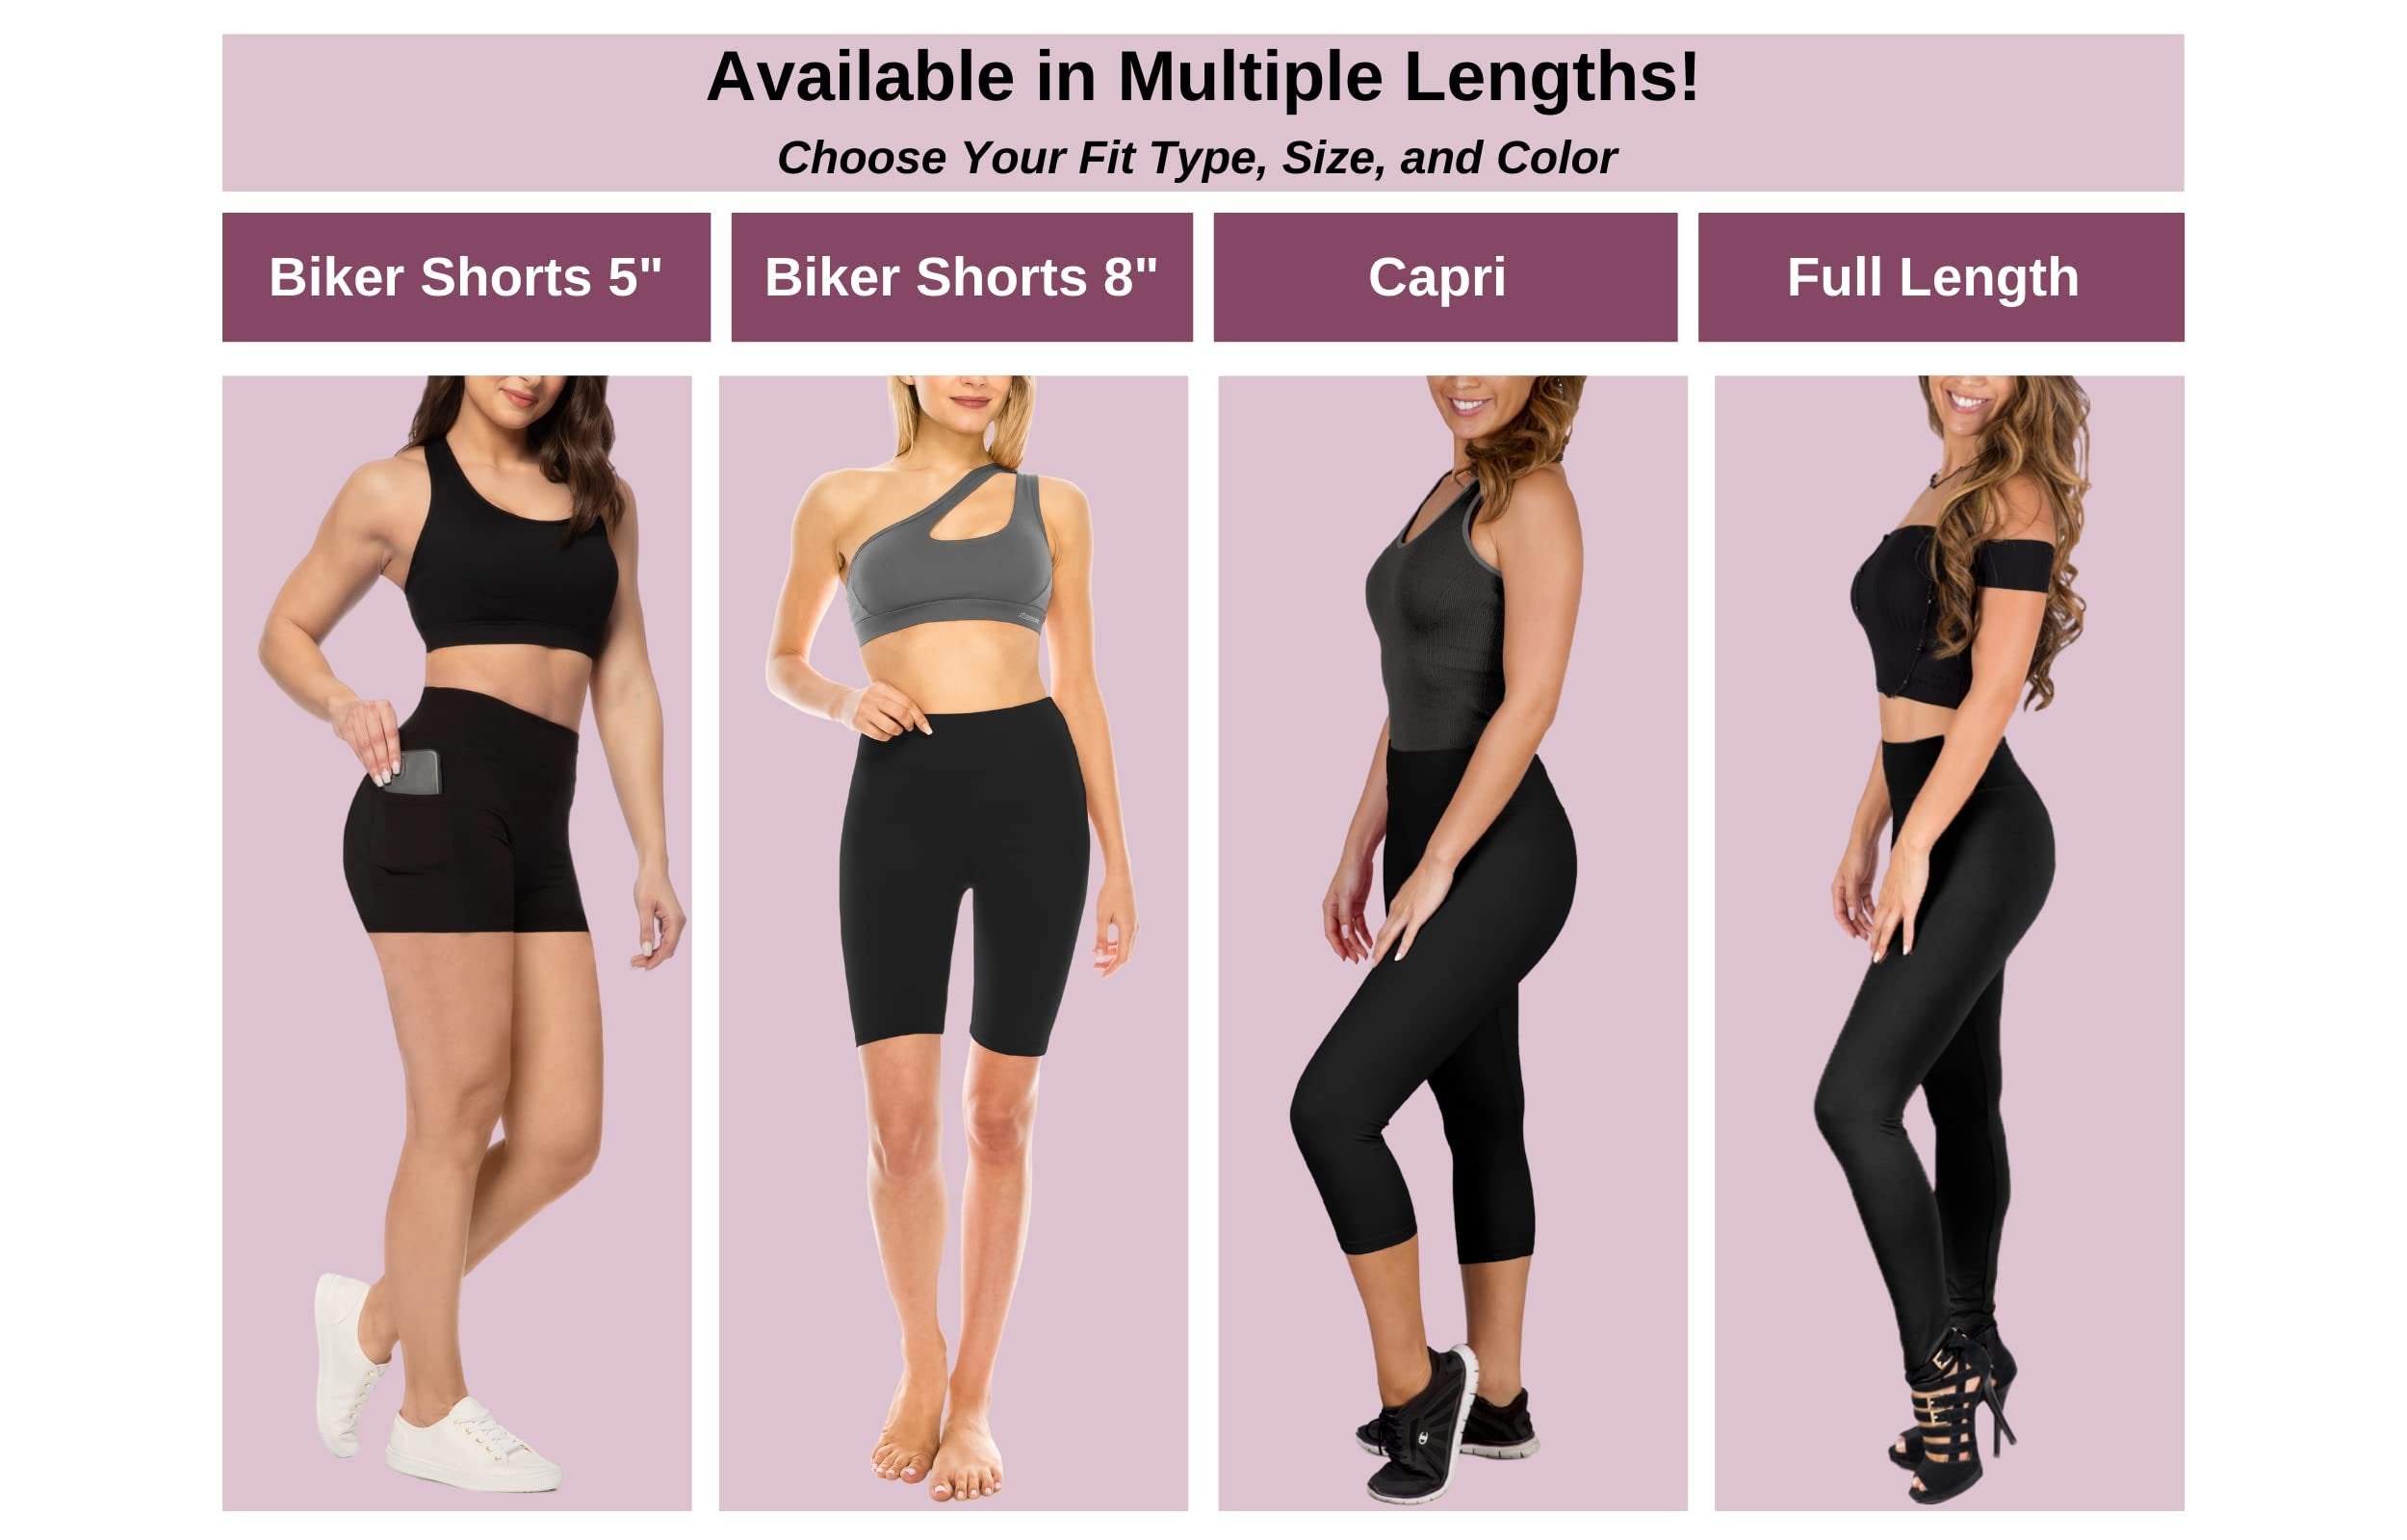 SATINA High Waisted Capri Leggings for Women - Capri Leggings for Women - High Waist for Tummy Control - Charcoal Capri Leggings for |3 Inch Waistband (One Size, Charcoal)